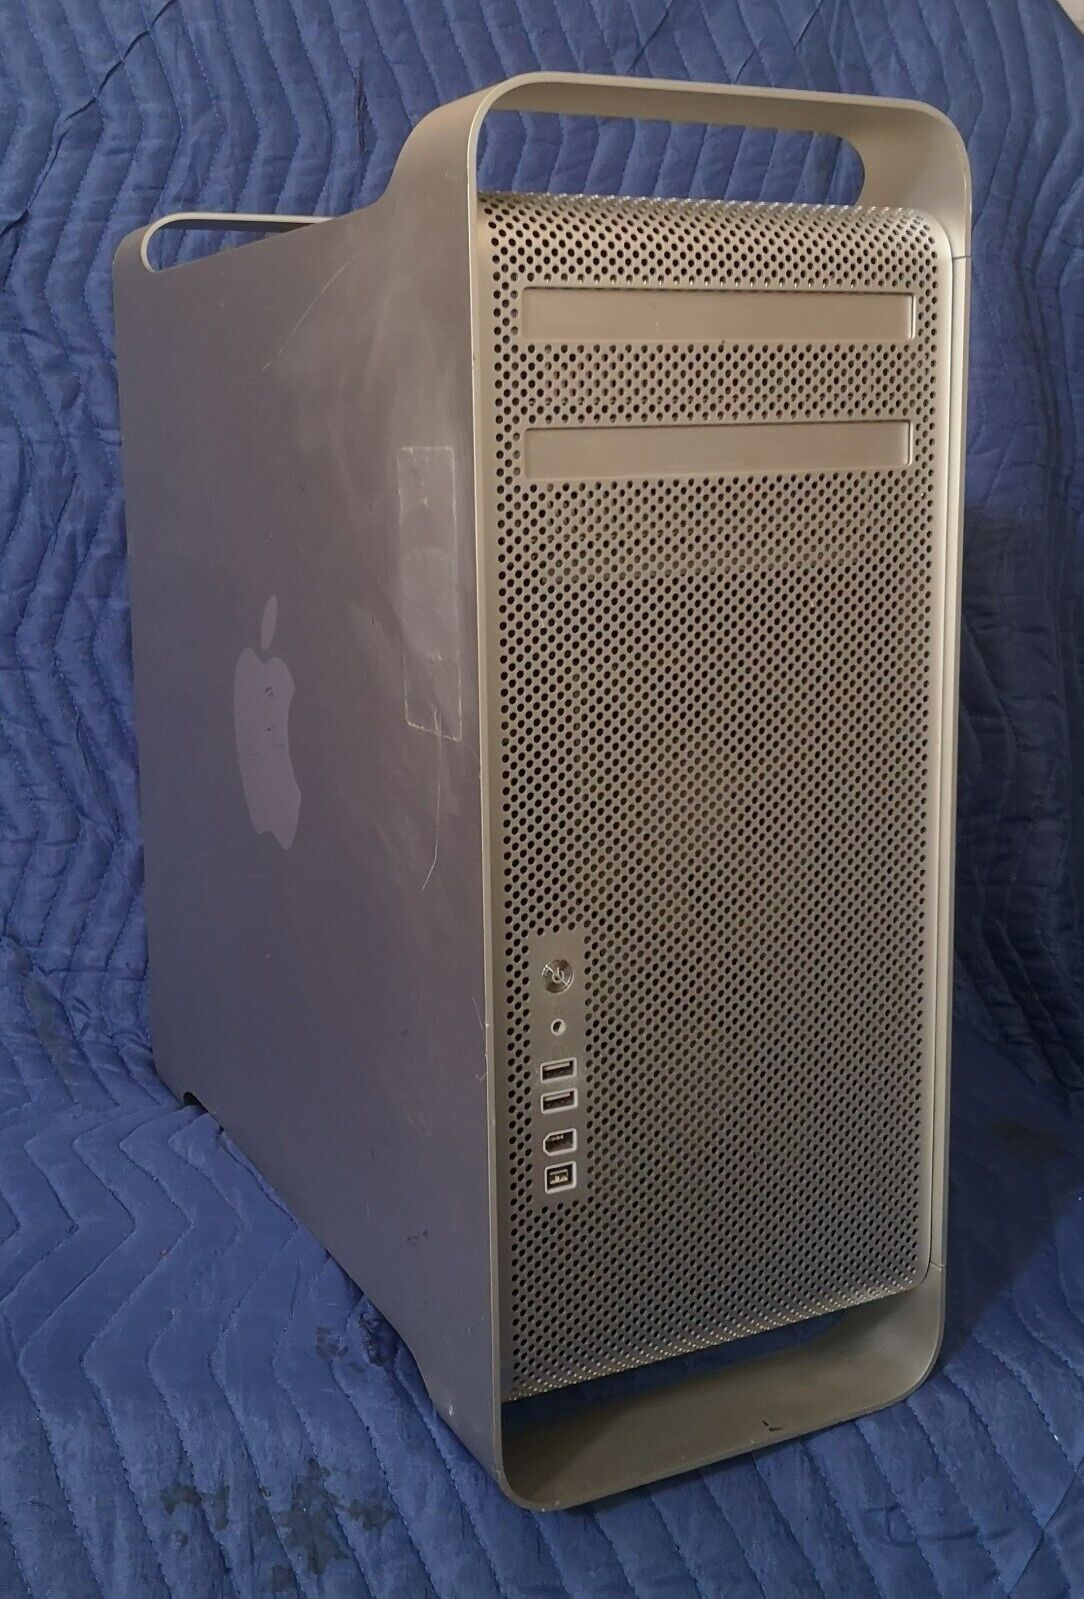 As-Is Apple Intel Mac Pro A1186 Macintosh w/PSU - Missing Many Parts Local PULA